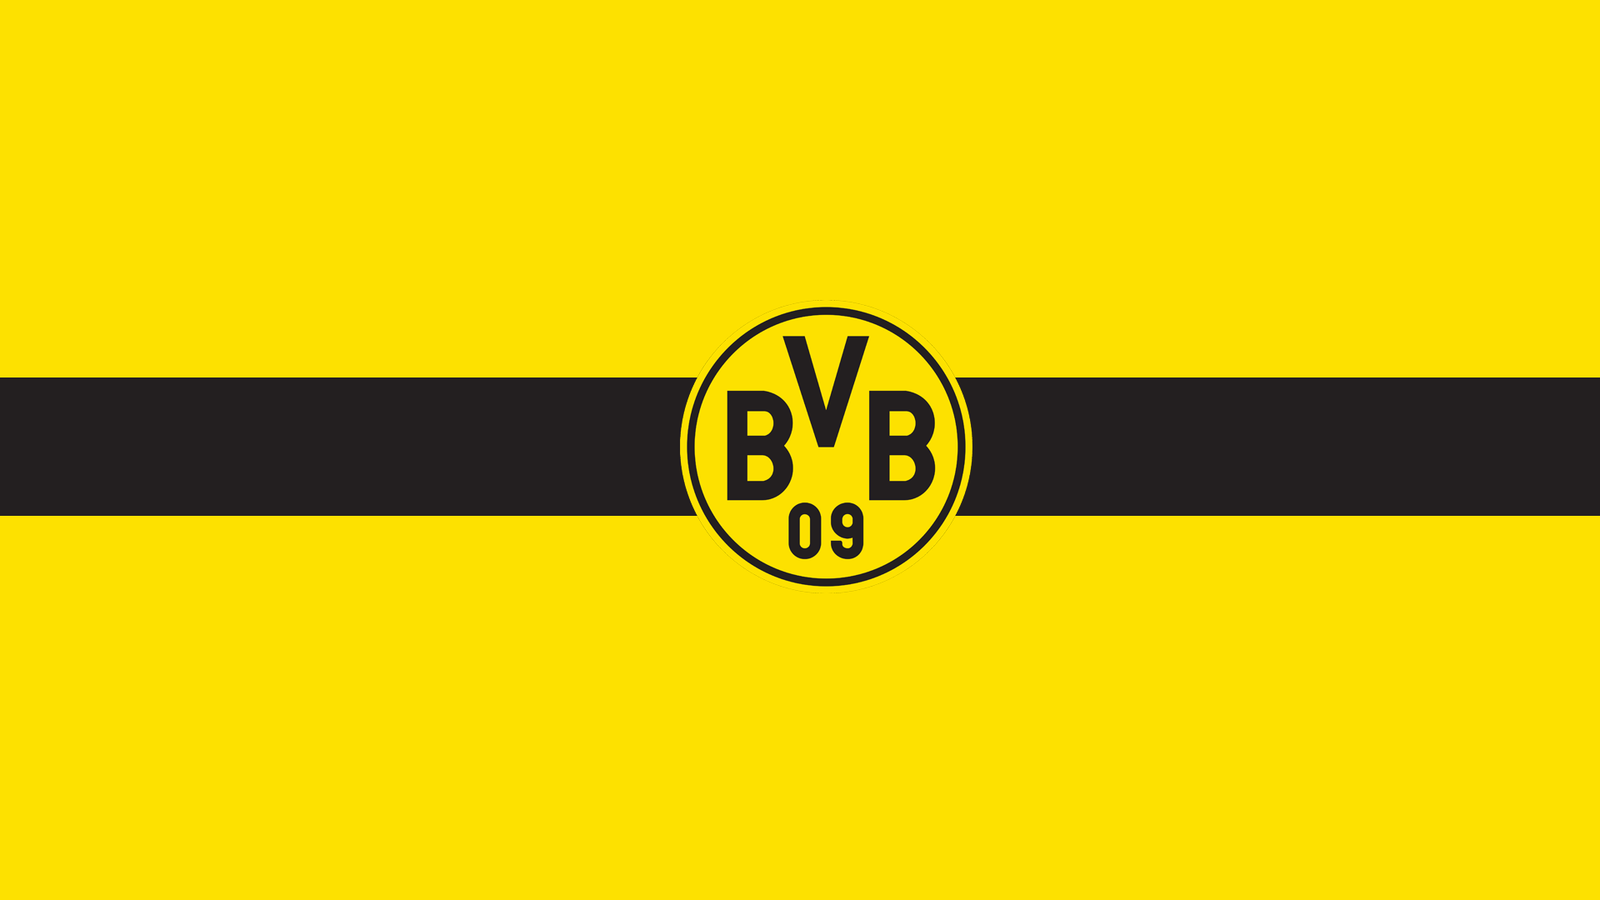 BVB Wallpaper Free BVB Background